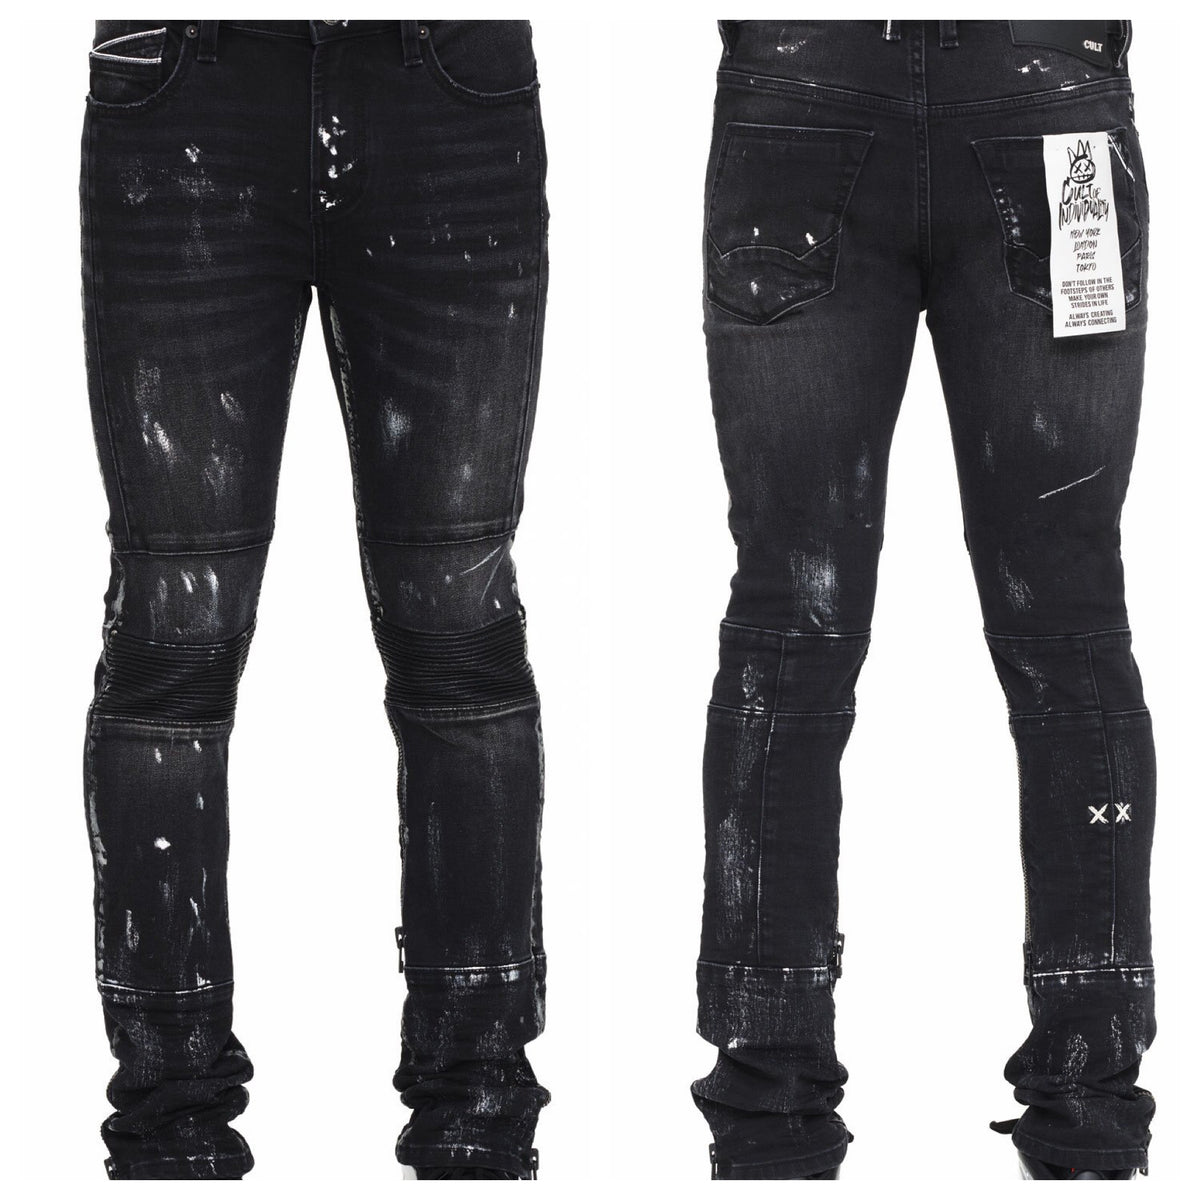 3M Punk Super Skinny Moto Jeans In Matrix Black